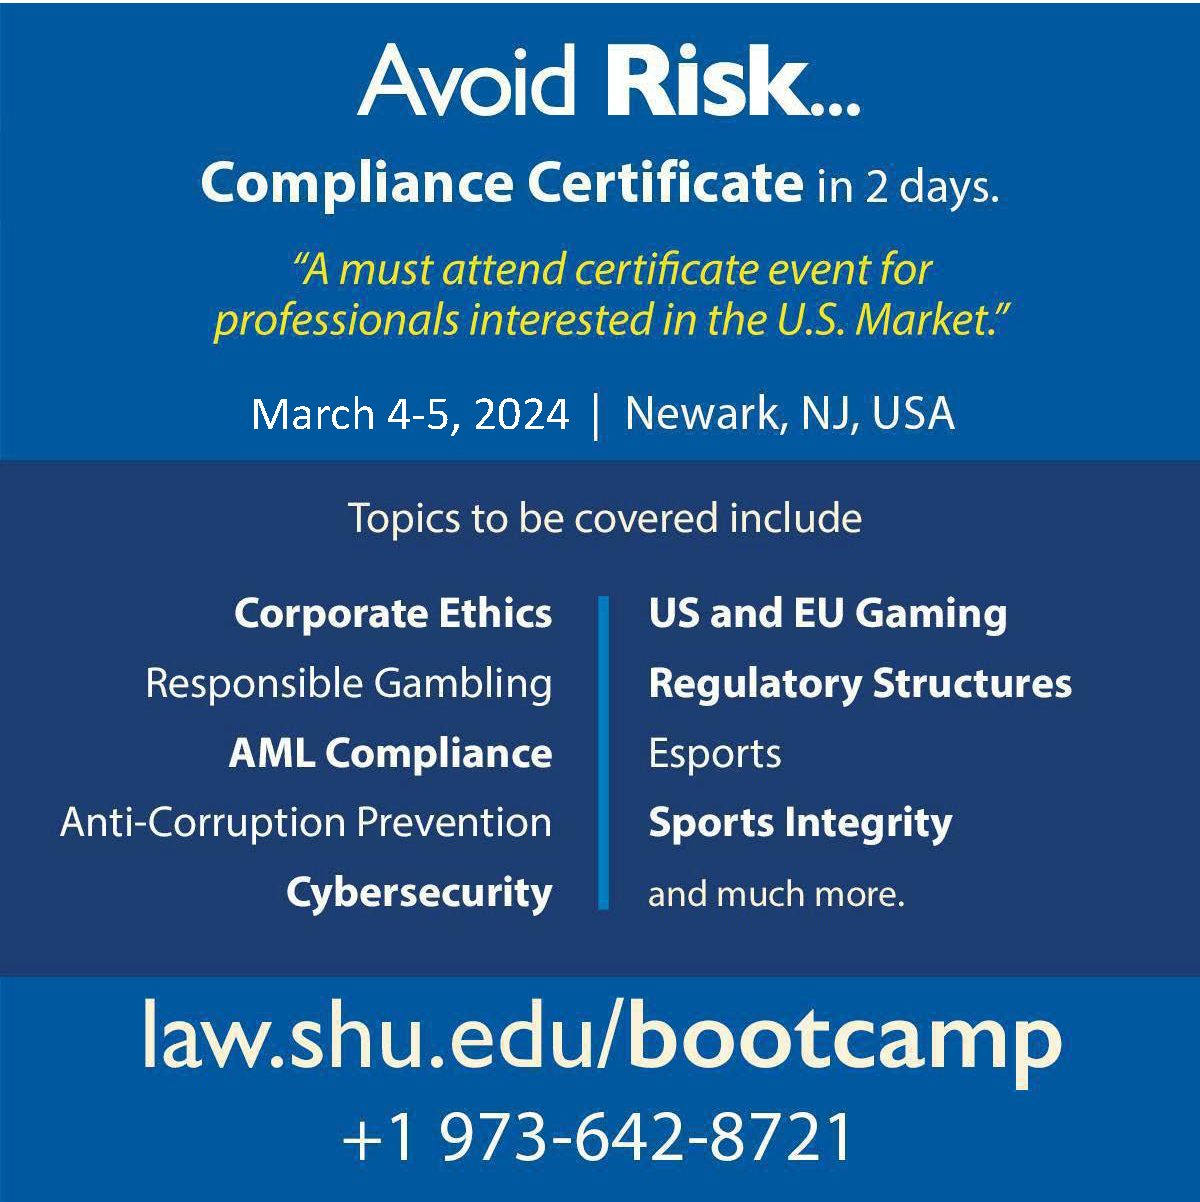 Avoid Risk - Compliance Certificate in 3 days